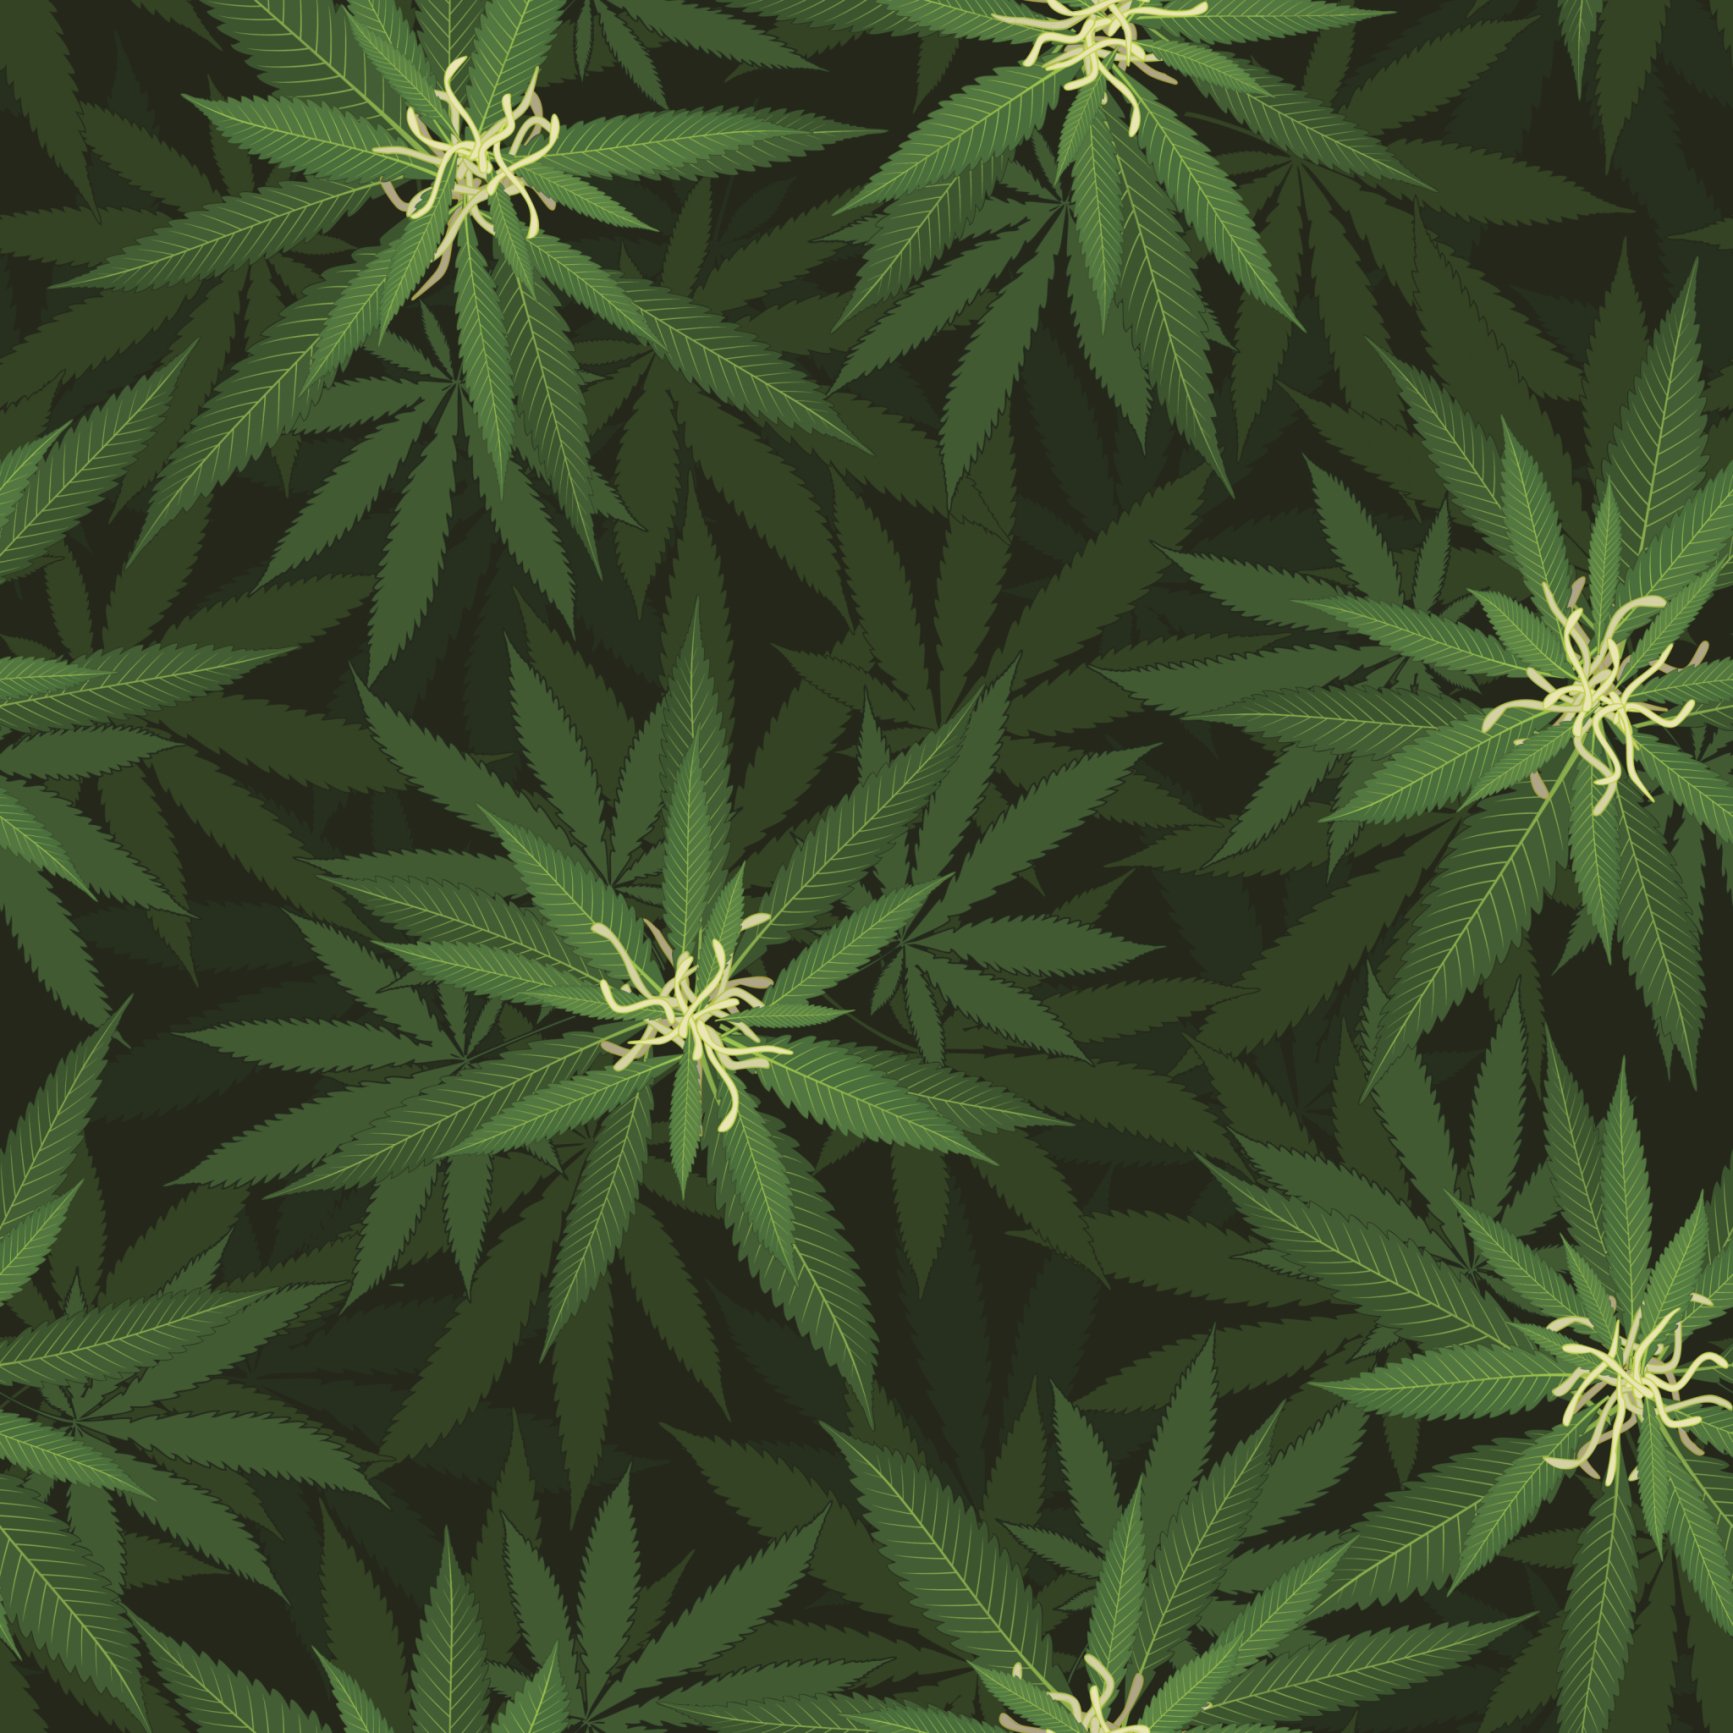 Marijuana bloom